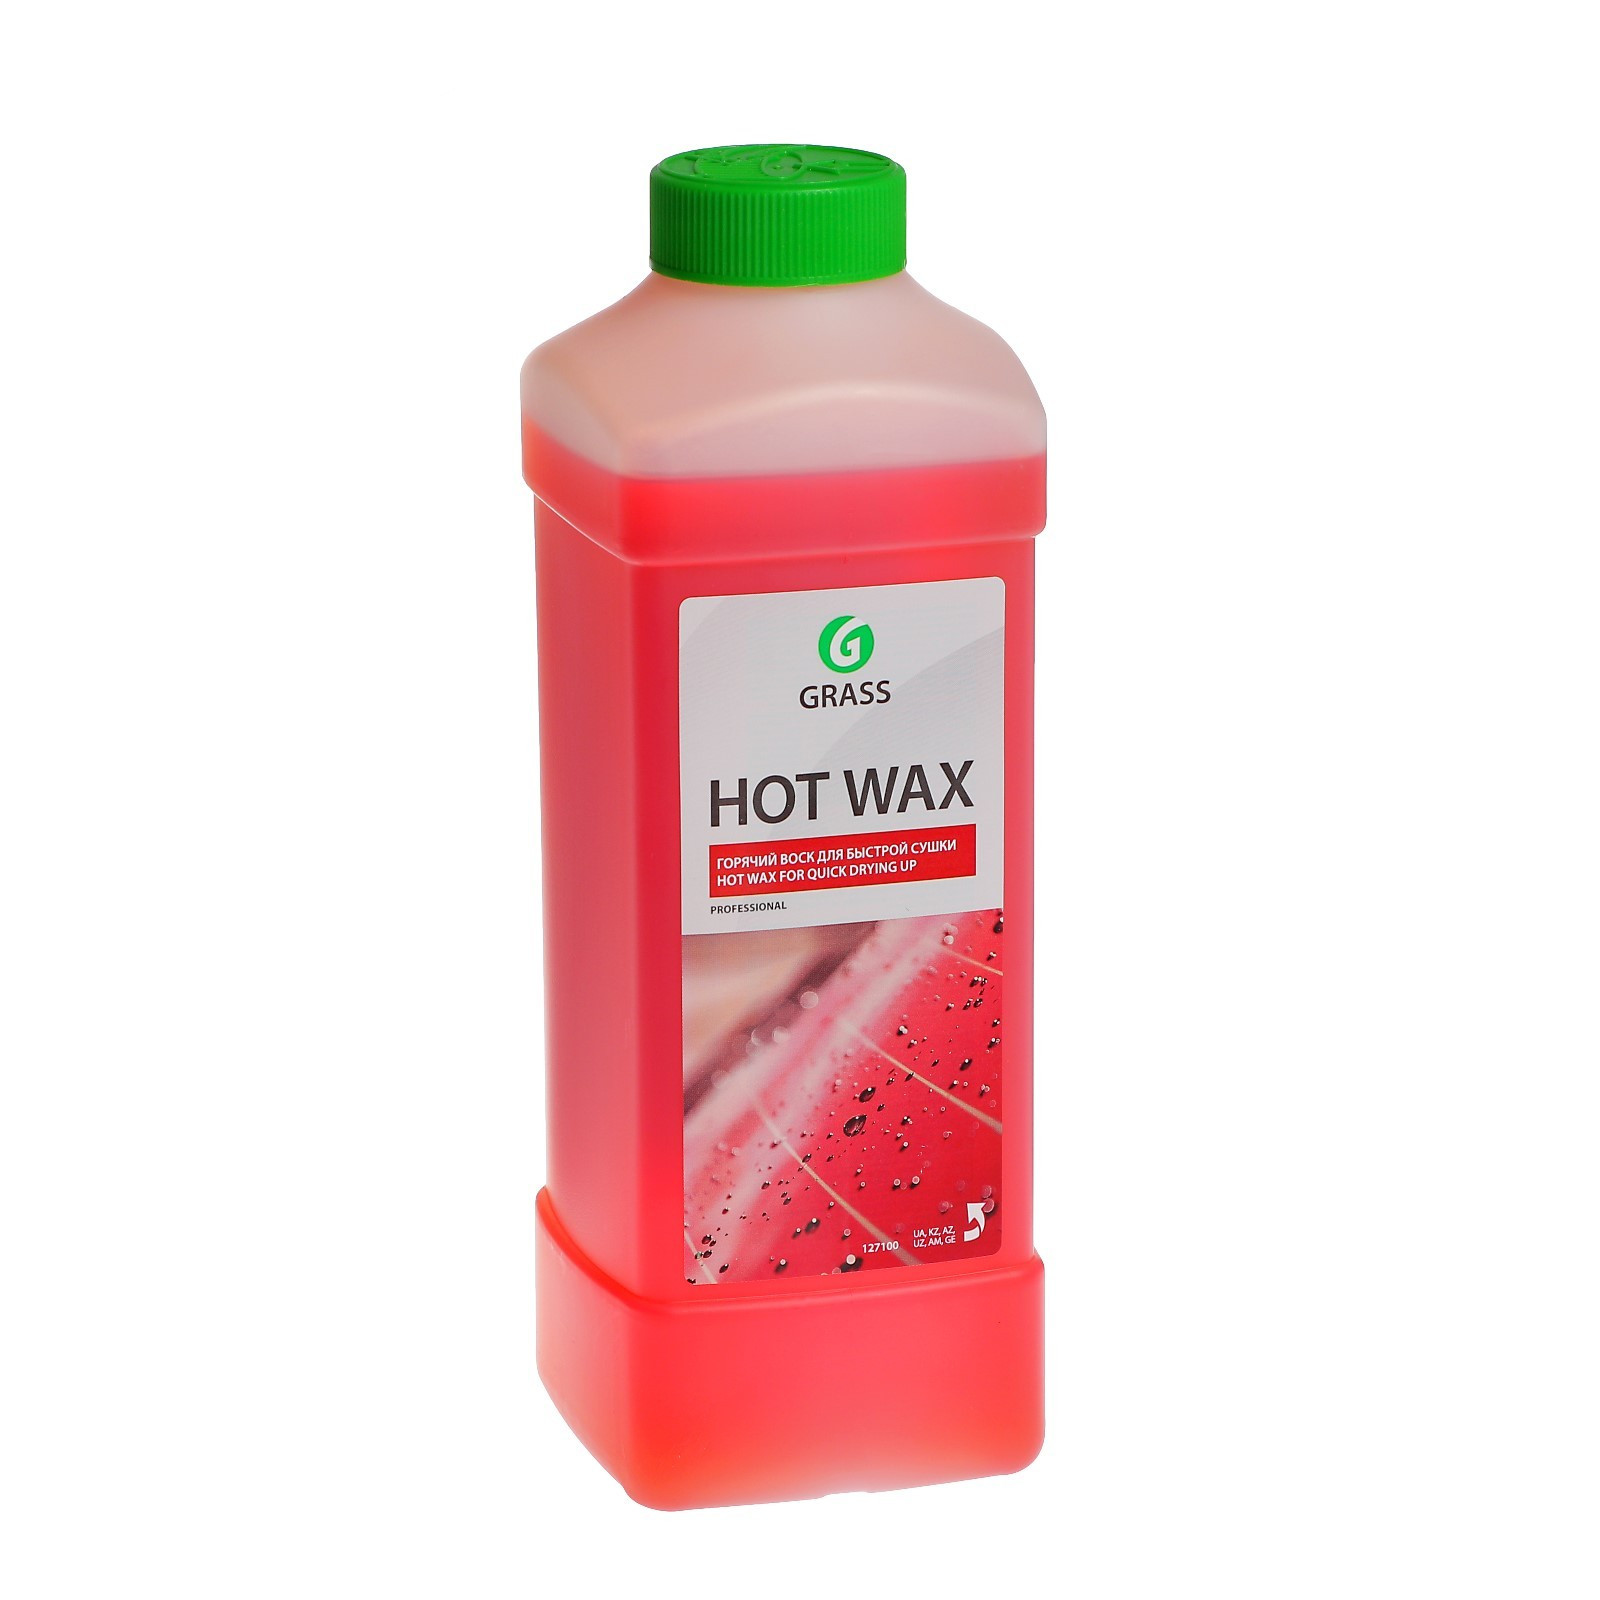 Горячий воск. Горячий воск grass hot Wax, 250 мл. Grass hot Wax горячий воск концентрат 1л. Grass воск Nano Wax 1л 110253. Горячий воск "hot Wax" (флакон 250 мл).